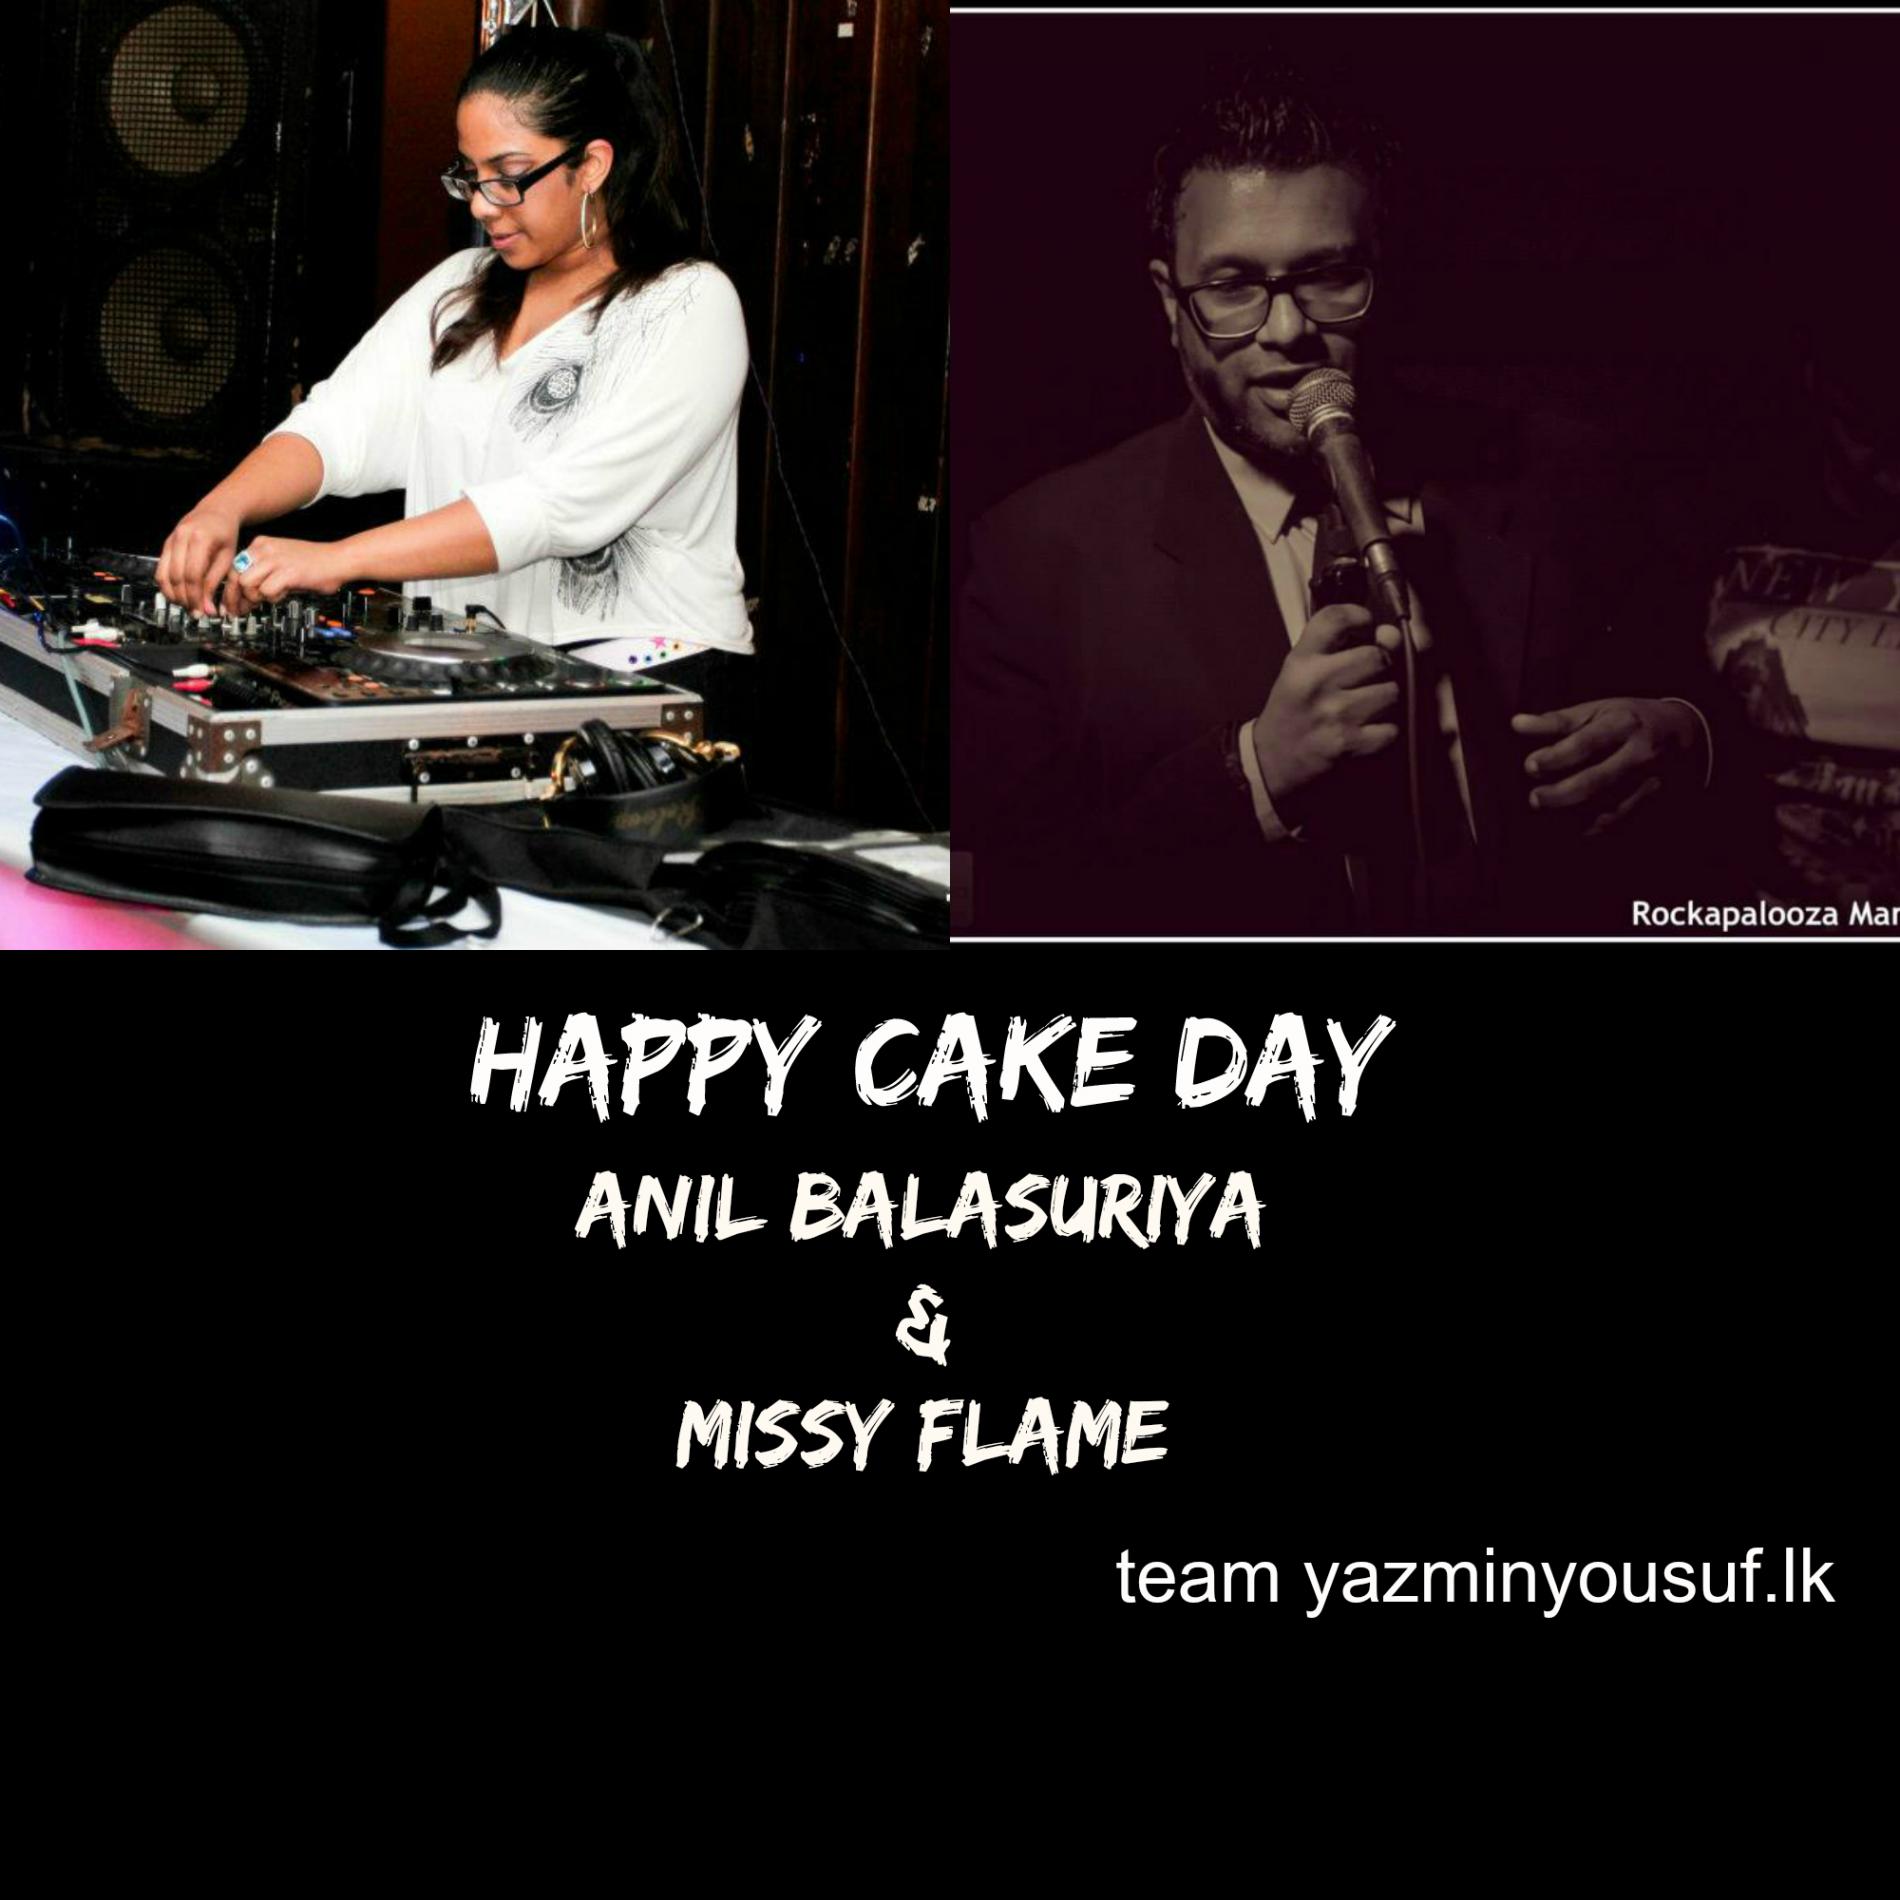 Happy Cake Day To Anil Balasuriya & Missy Flame